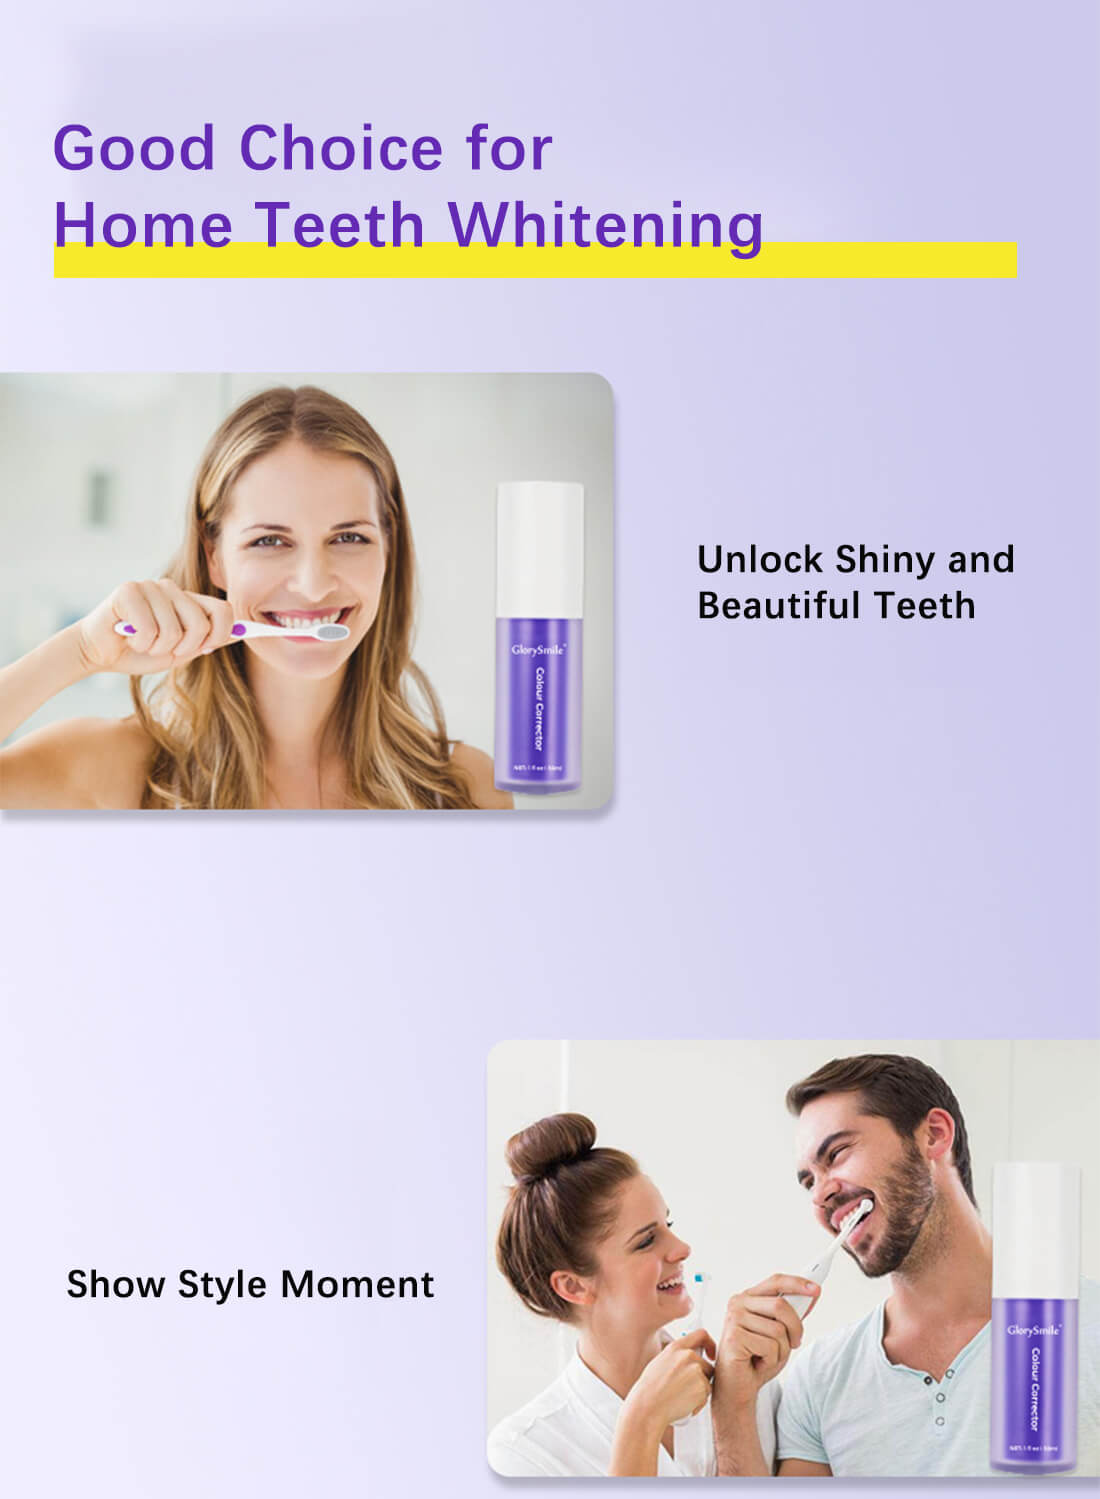 GlorySmile Teeth Whitening Serum